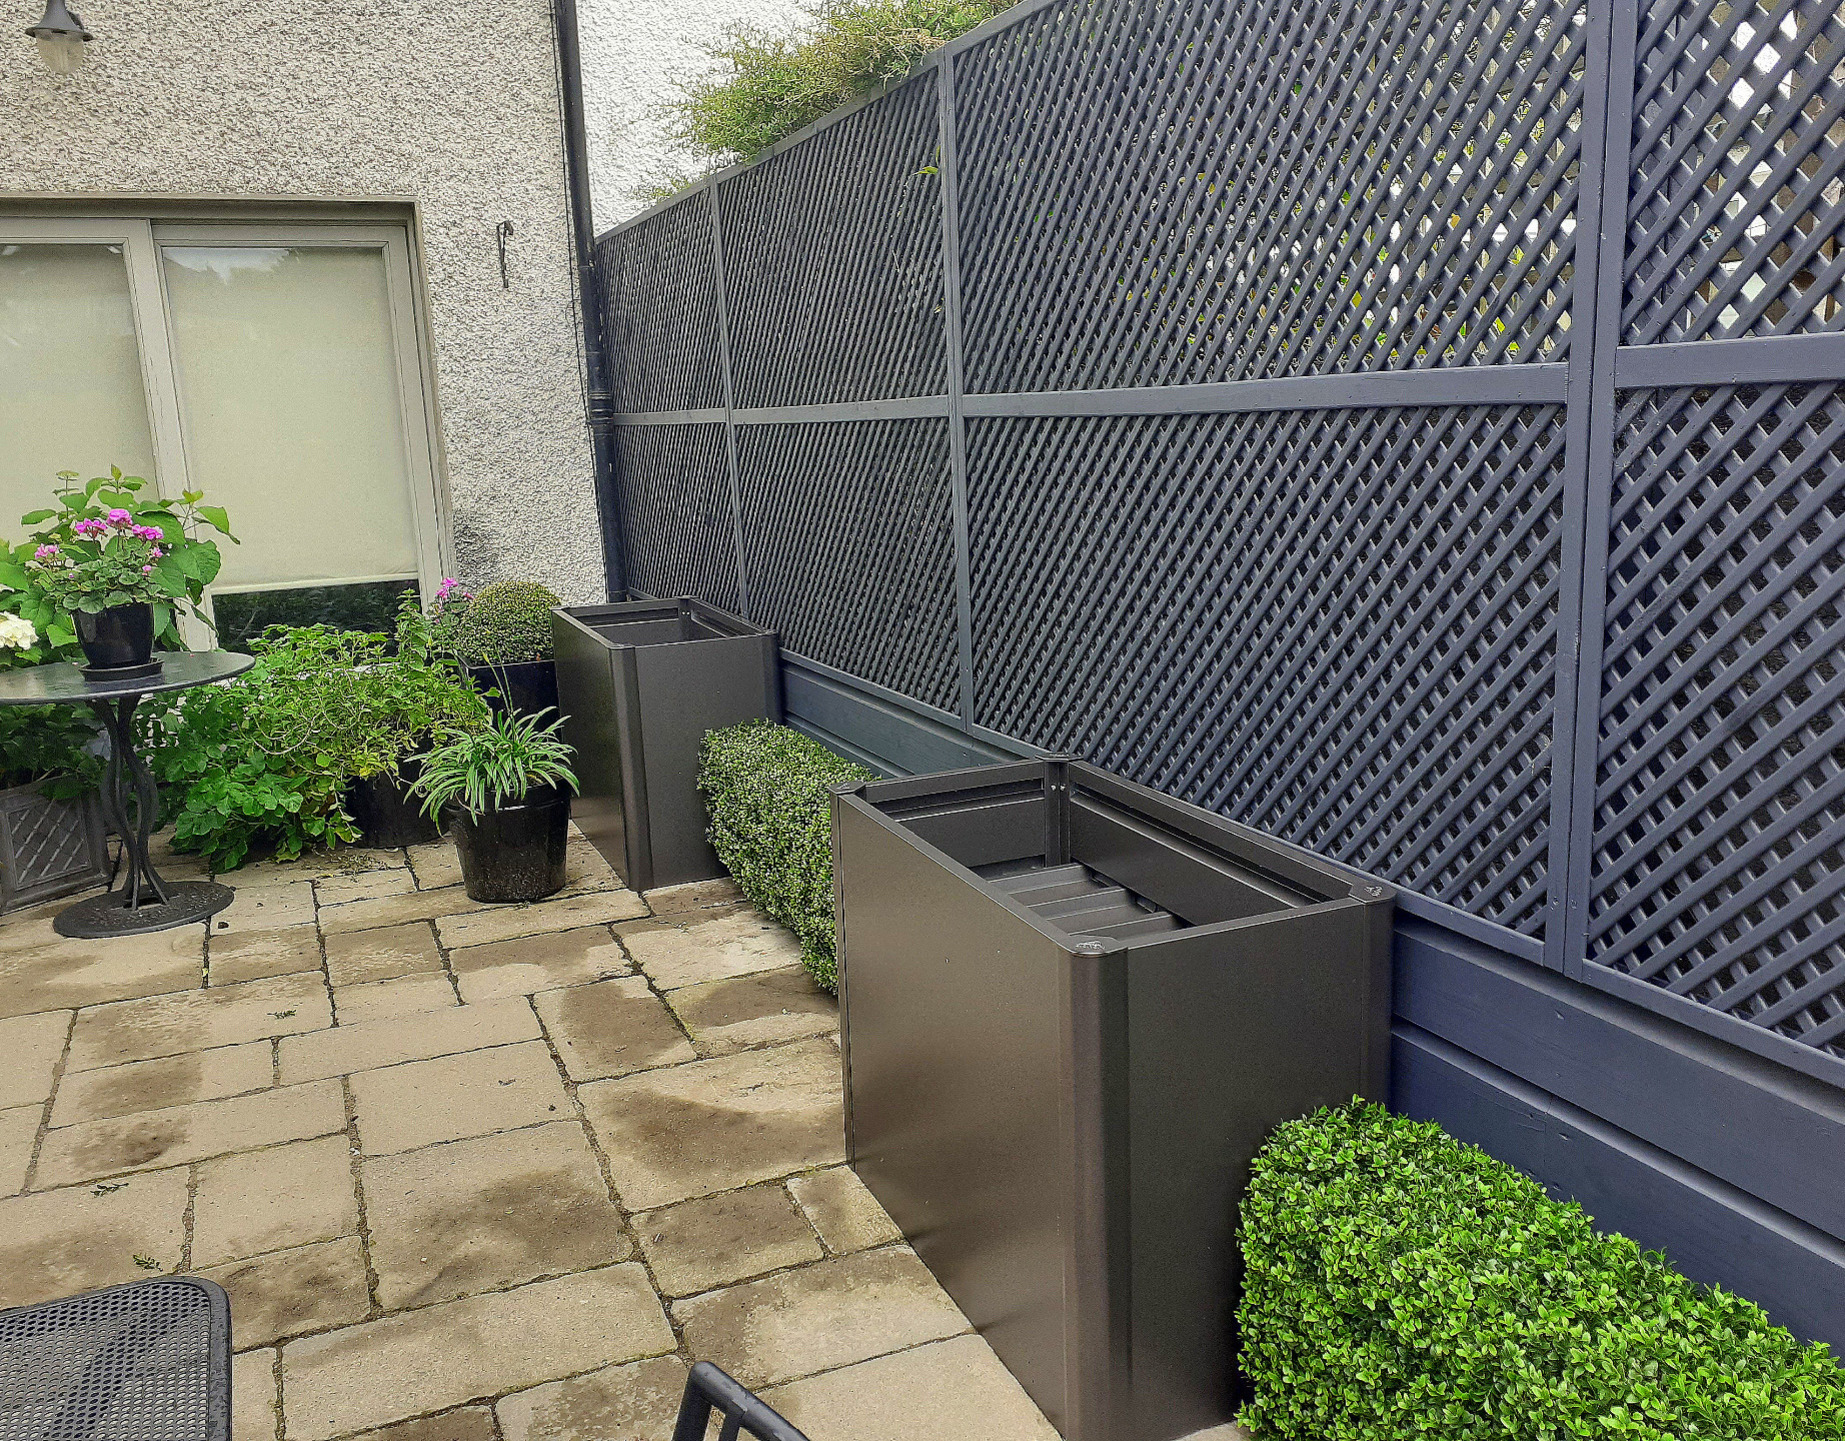 A stunning, durable & innovative steel Planter |Biohort Planting Bed Belvedere Size M in metallic dark grey | Supplied + Fitted in Terenure, Dublin 6W | Owen Chubb